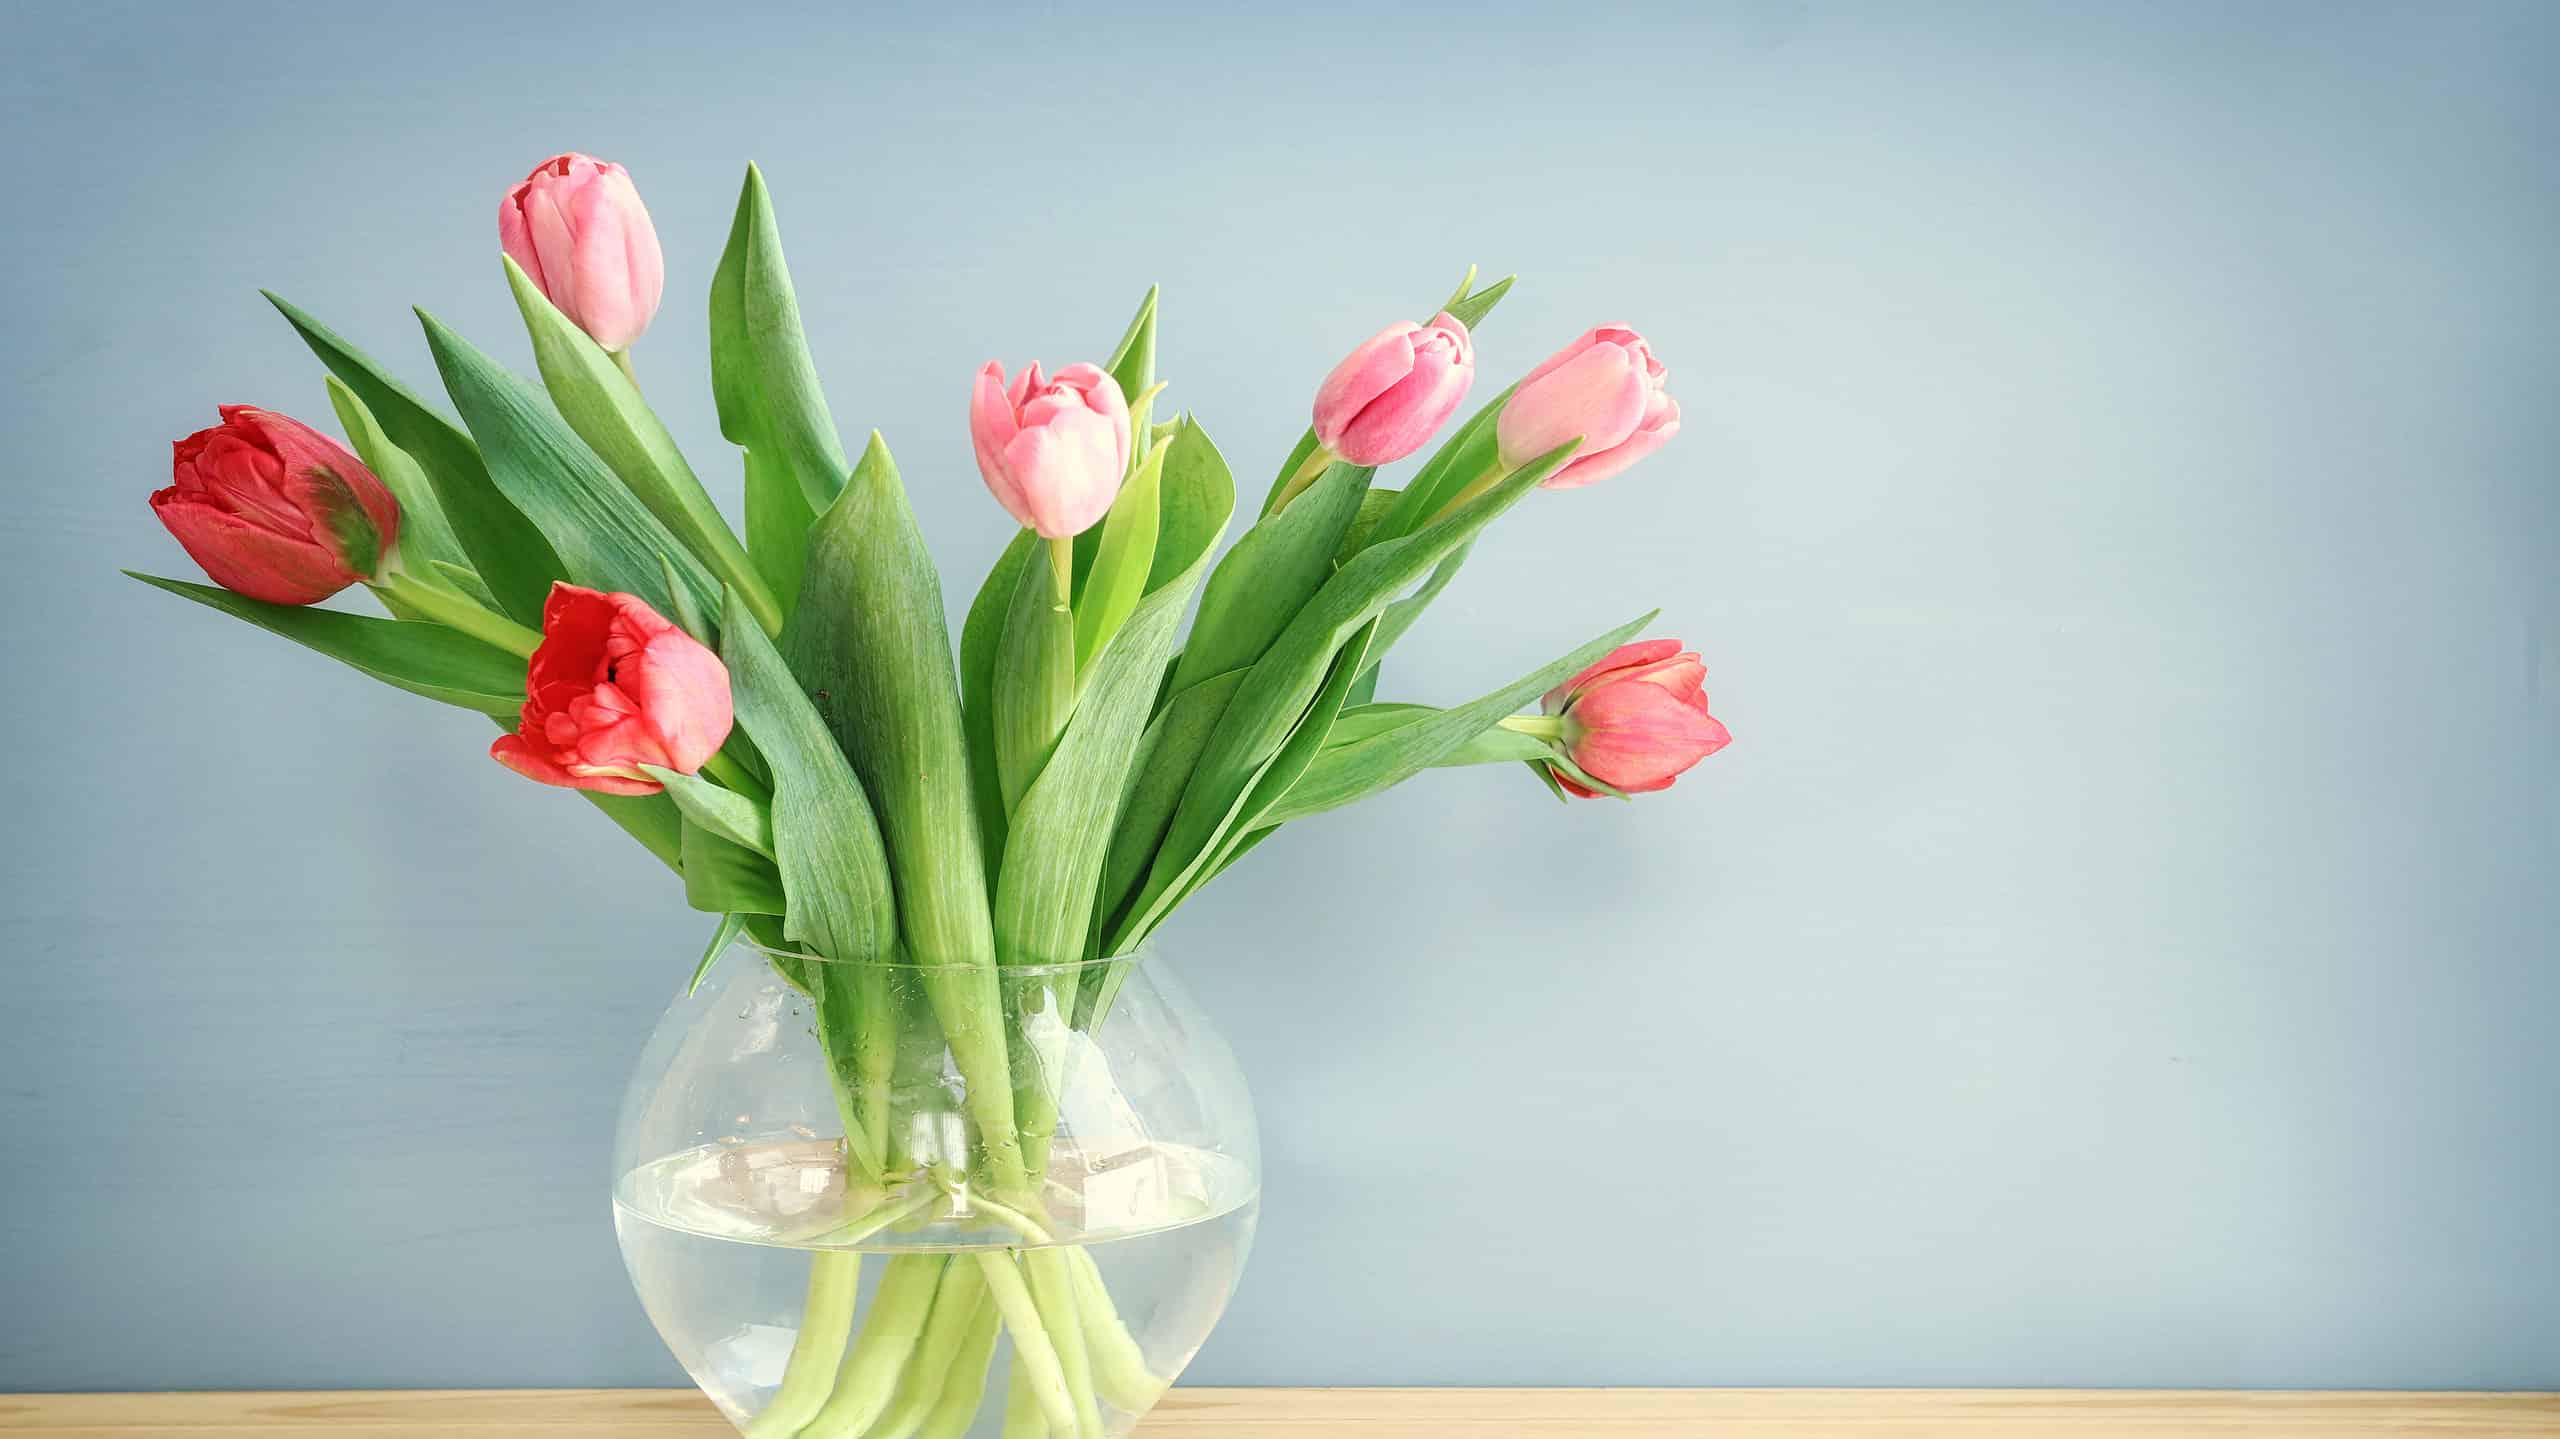 Tulips In A Vase: How To Make Tulips Last Longer - AZ Animals